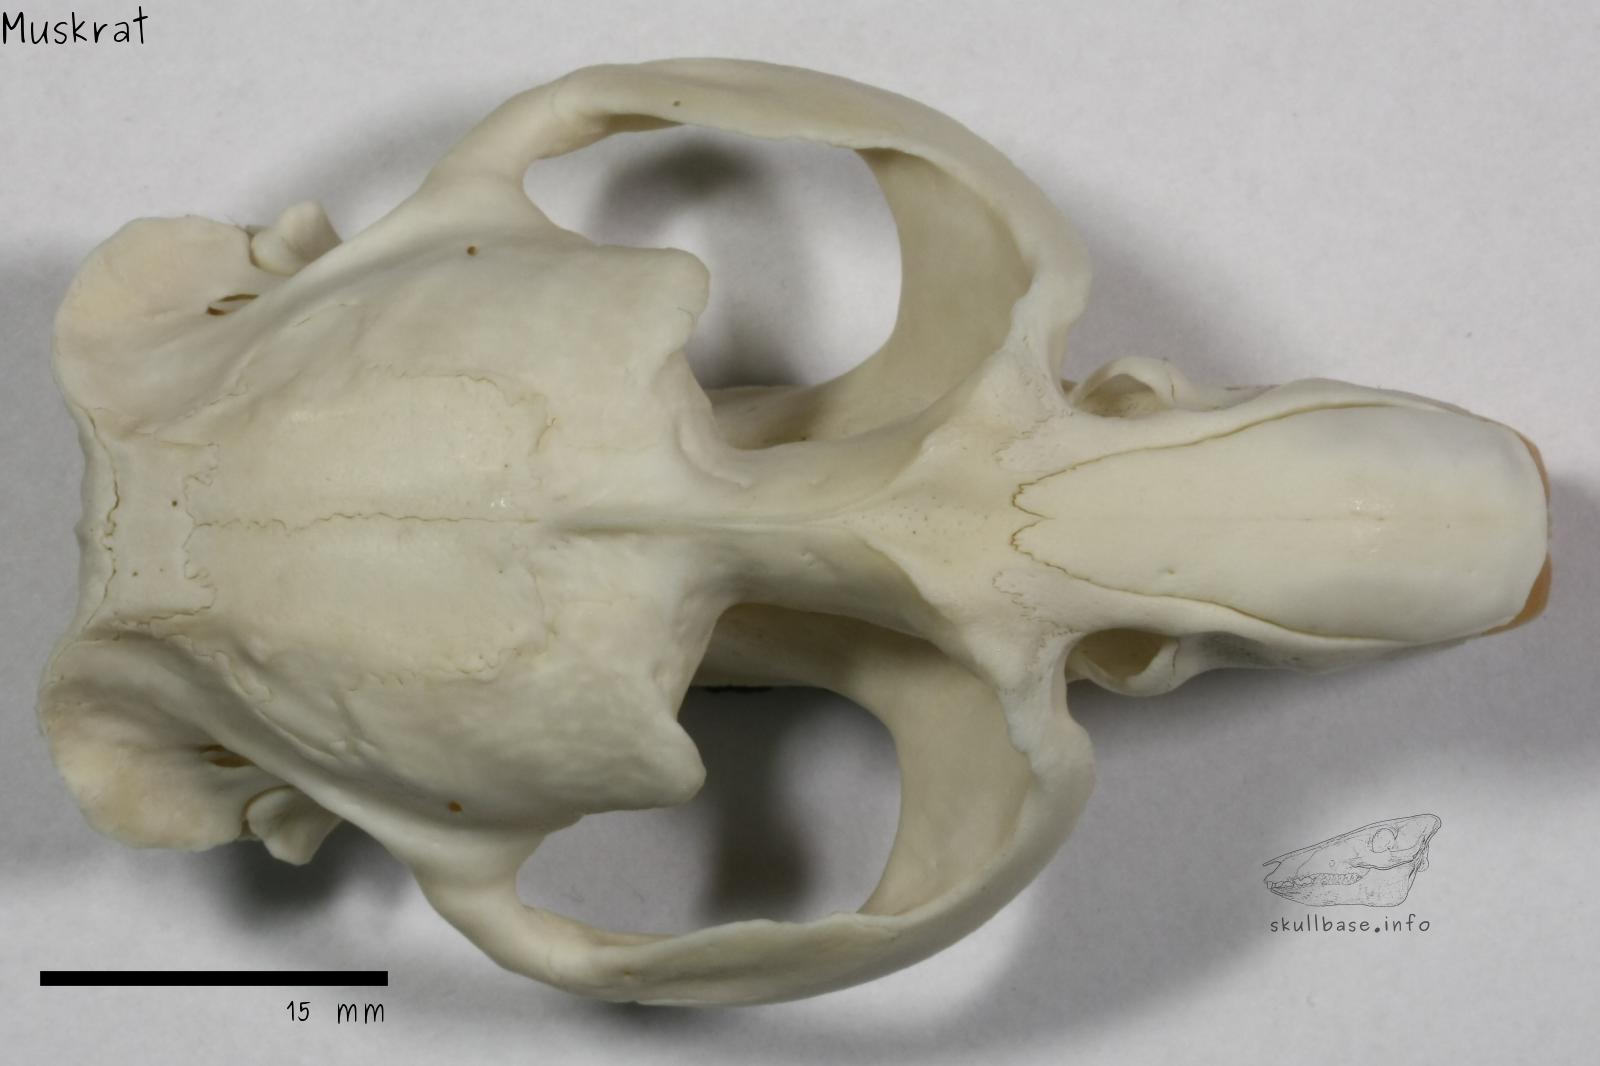 Muskrat (Ondatra zibethicus) skull dorsal view without jaw